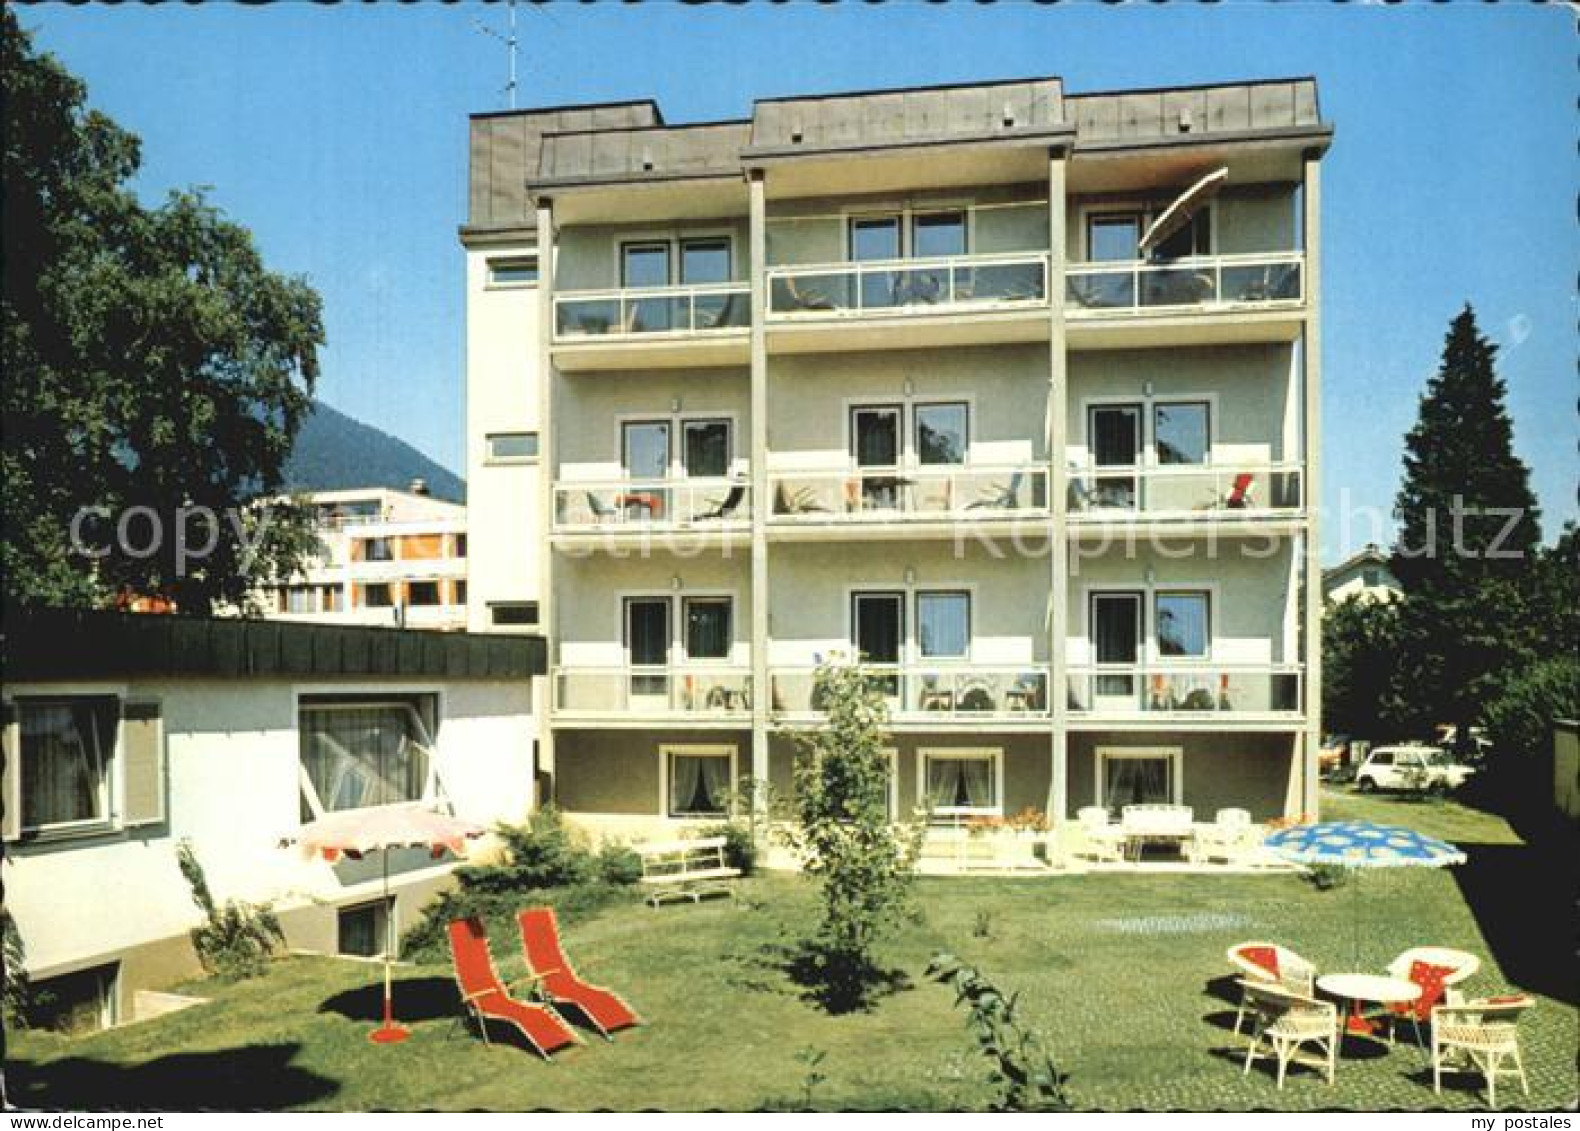 72505967 Bad Reichenhall Haus Vroni Bad Reichenhall - Bad Reichenhall